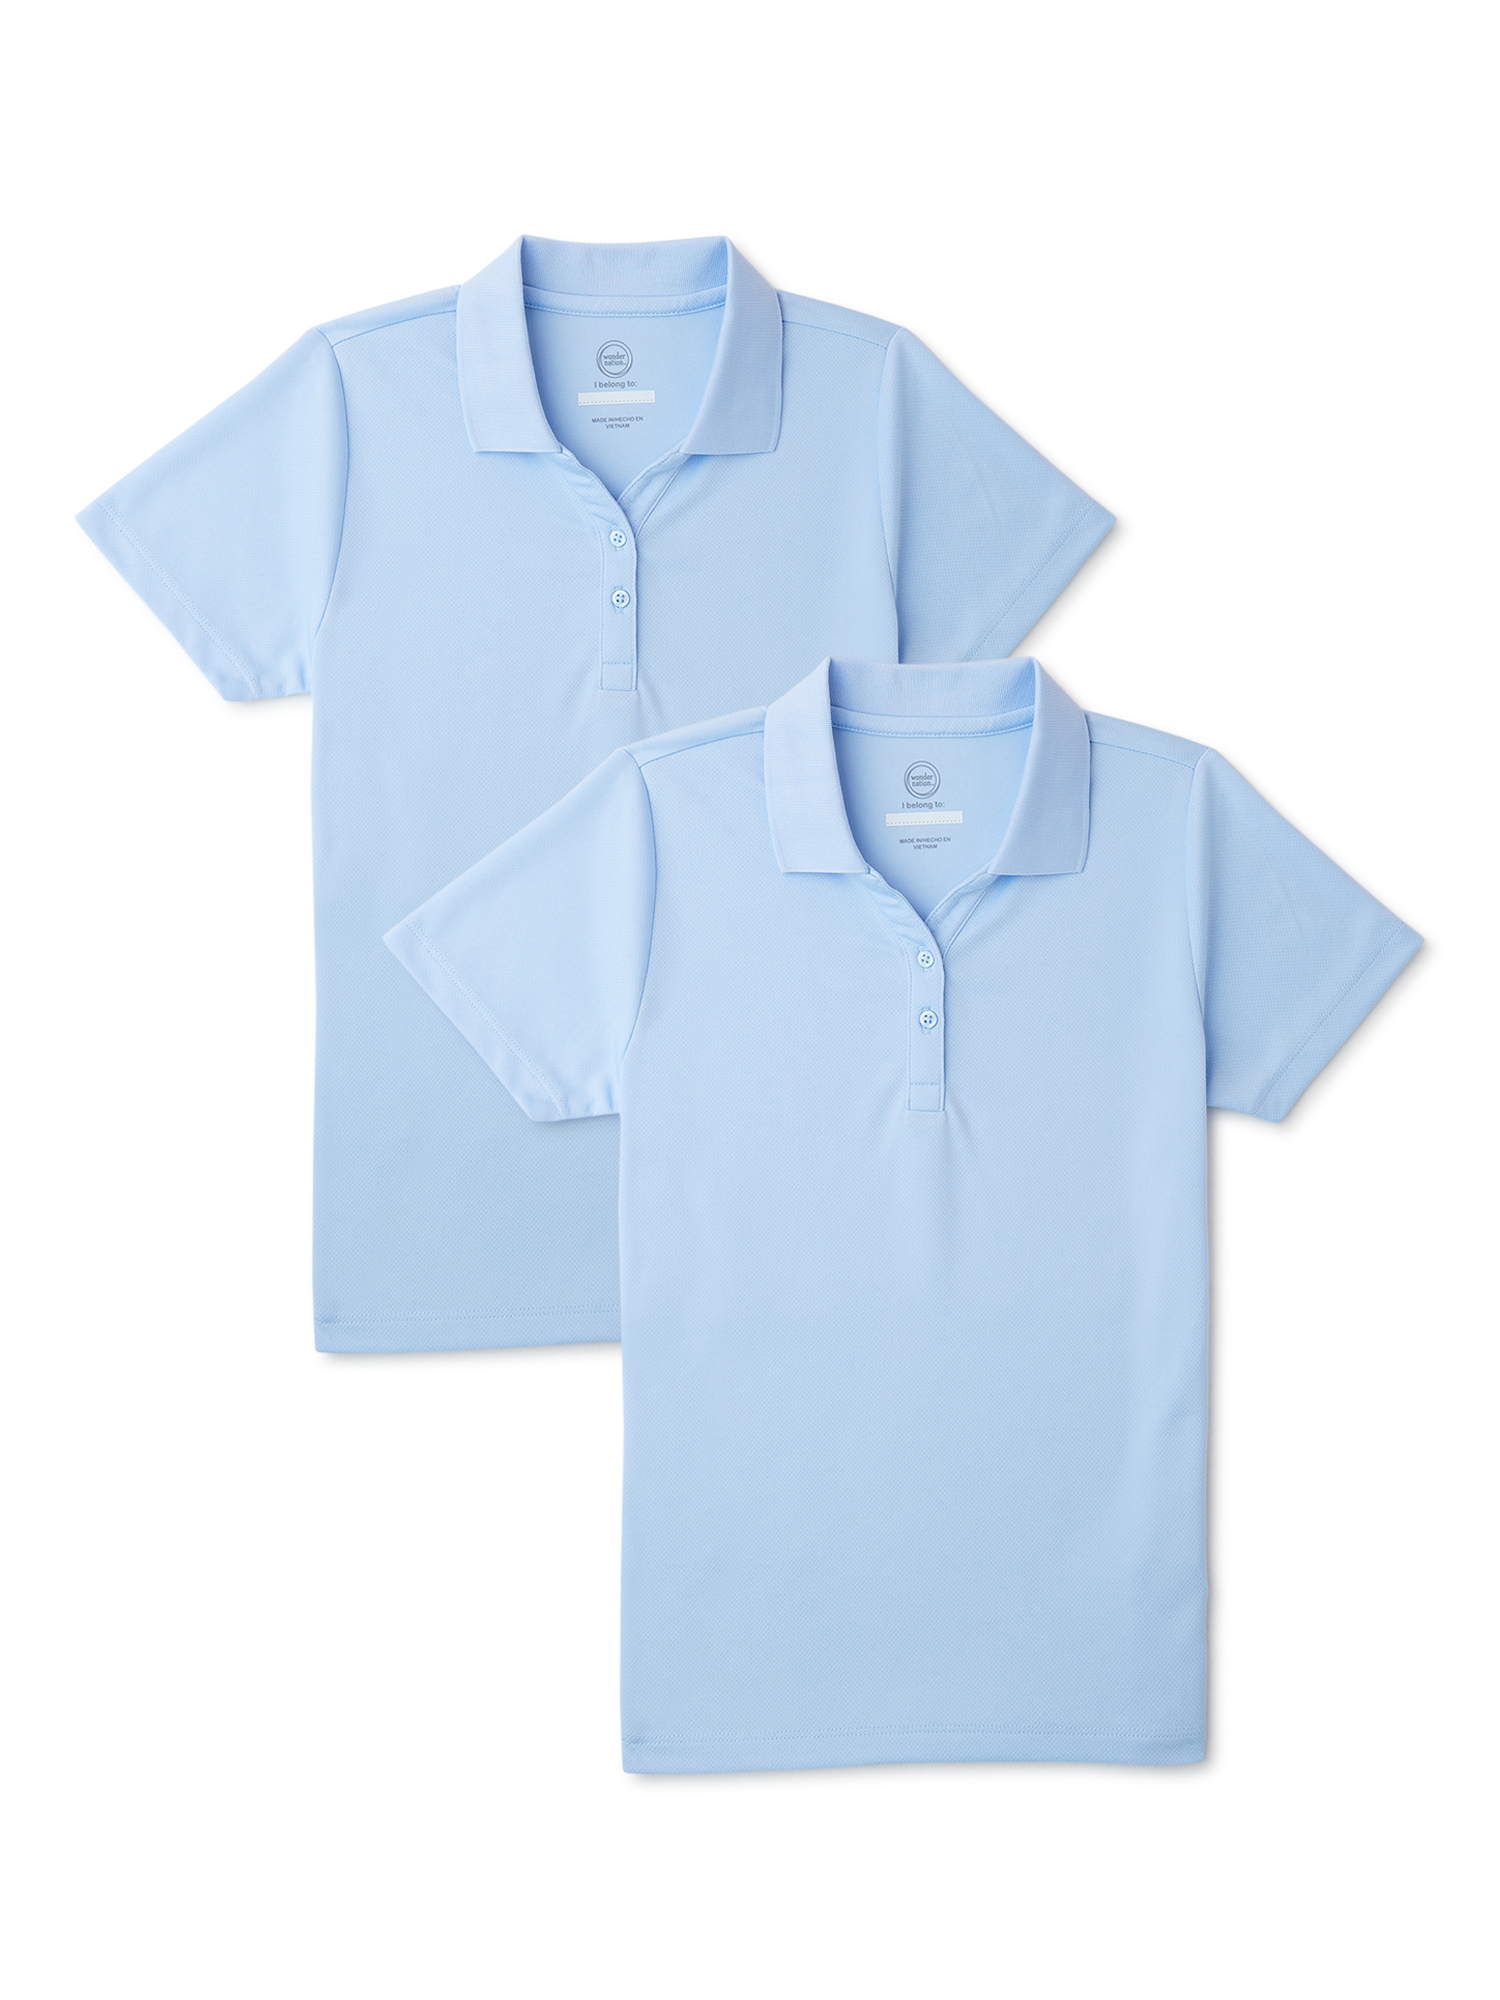 Wonder Nation Girls School Uniform Short Sleeve Performance Polo Shirt, 2-Pack, Sizes 4-18